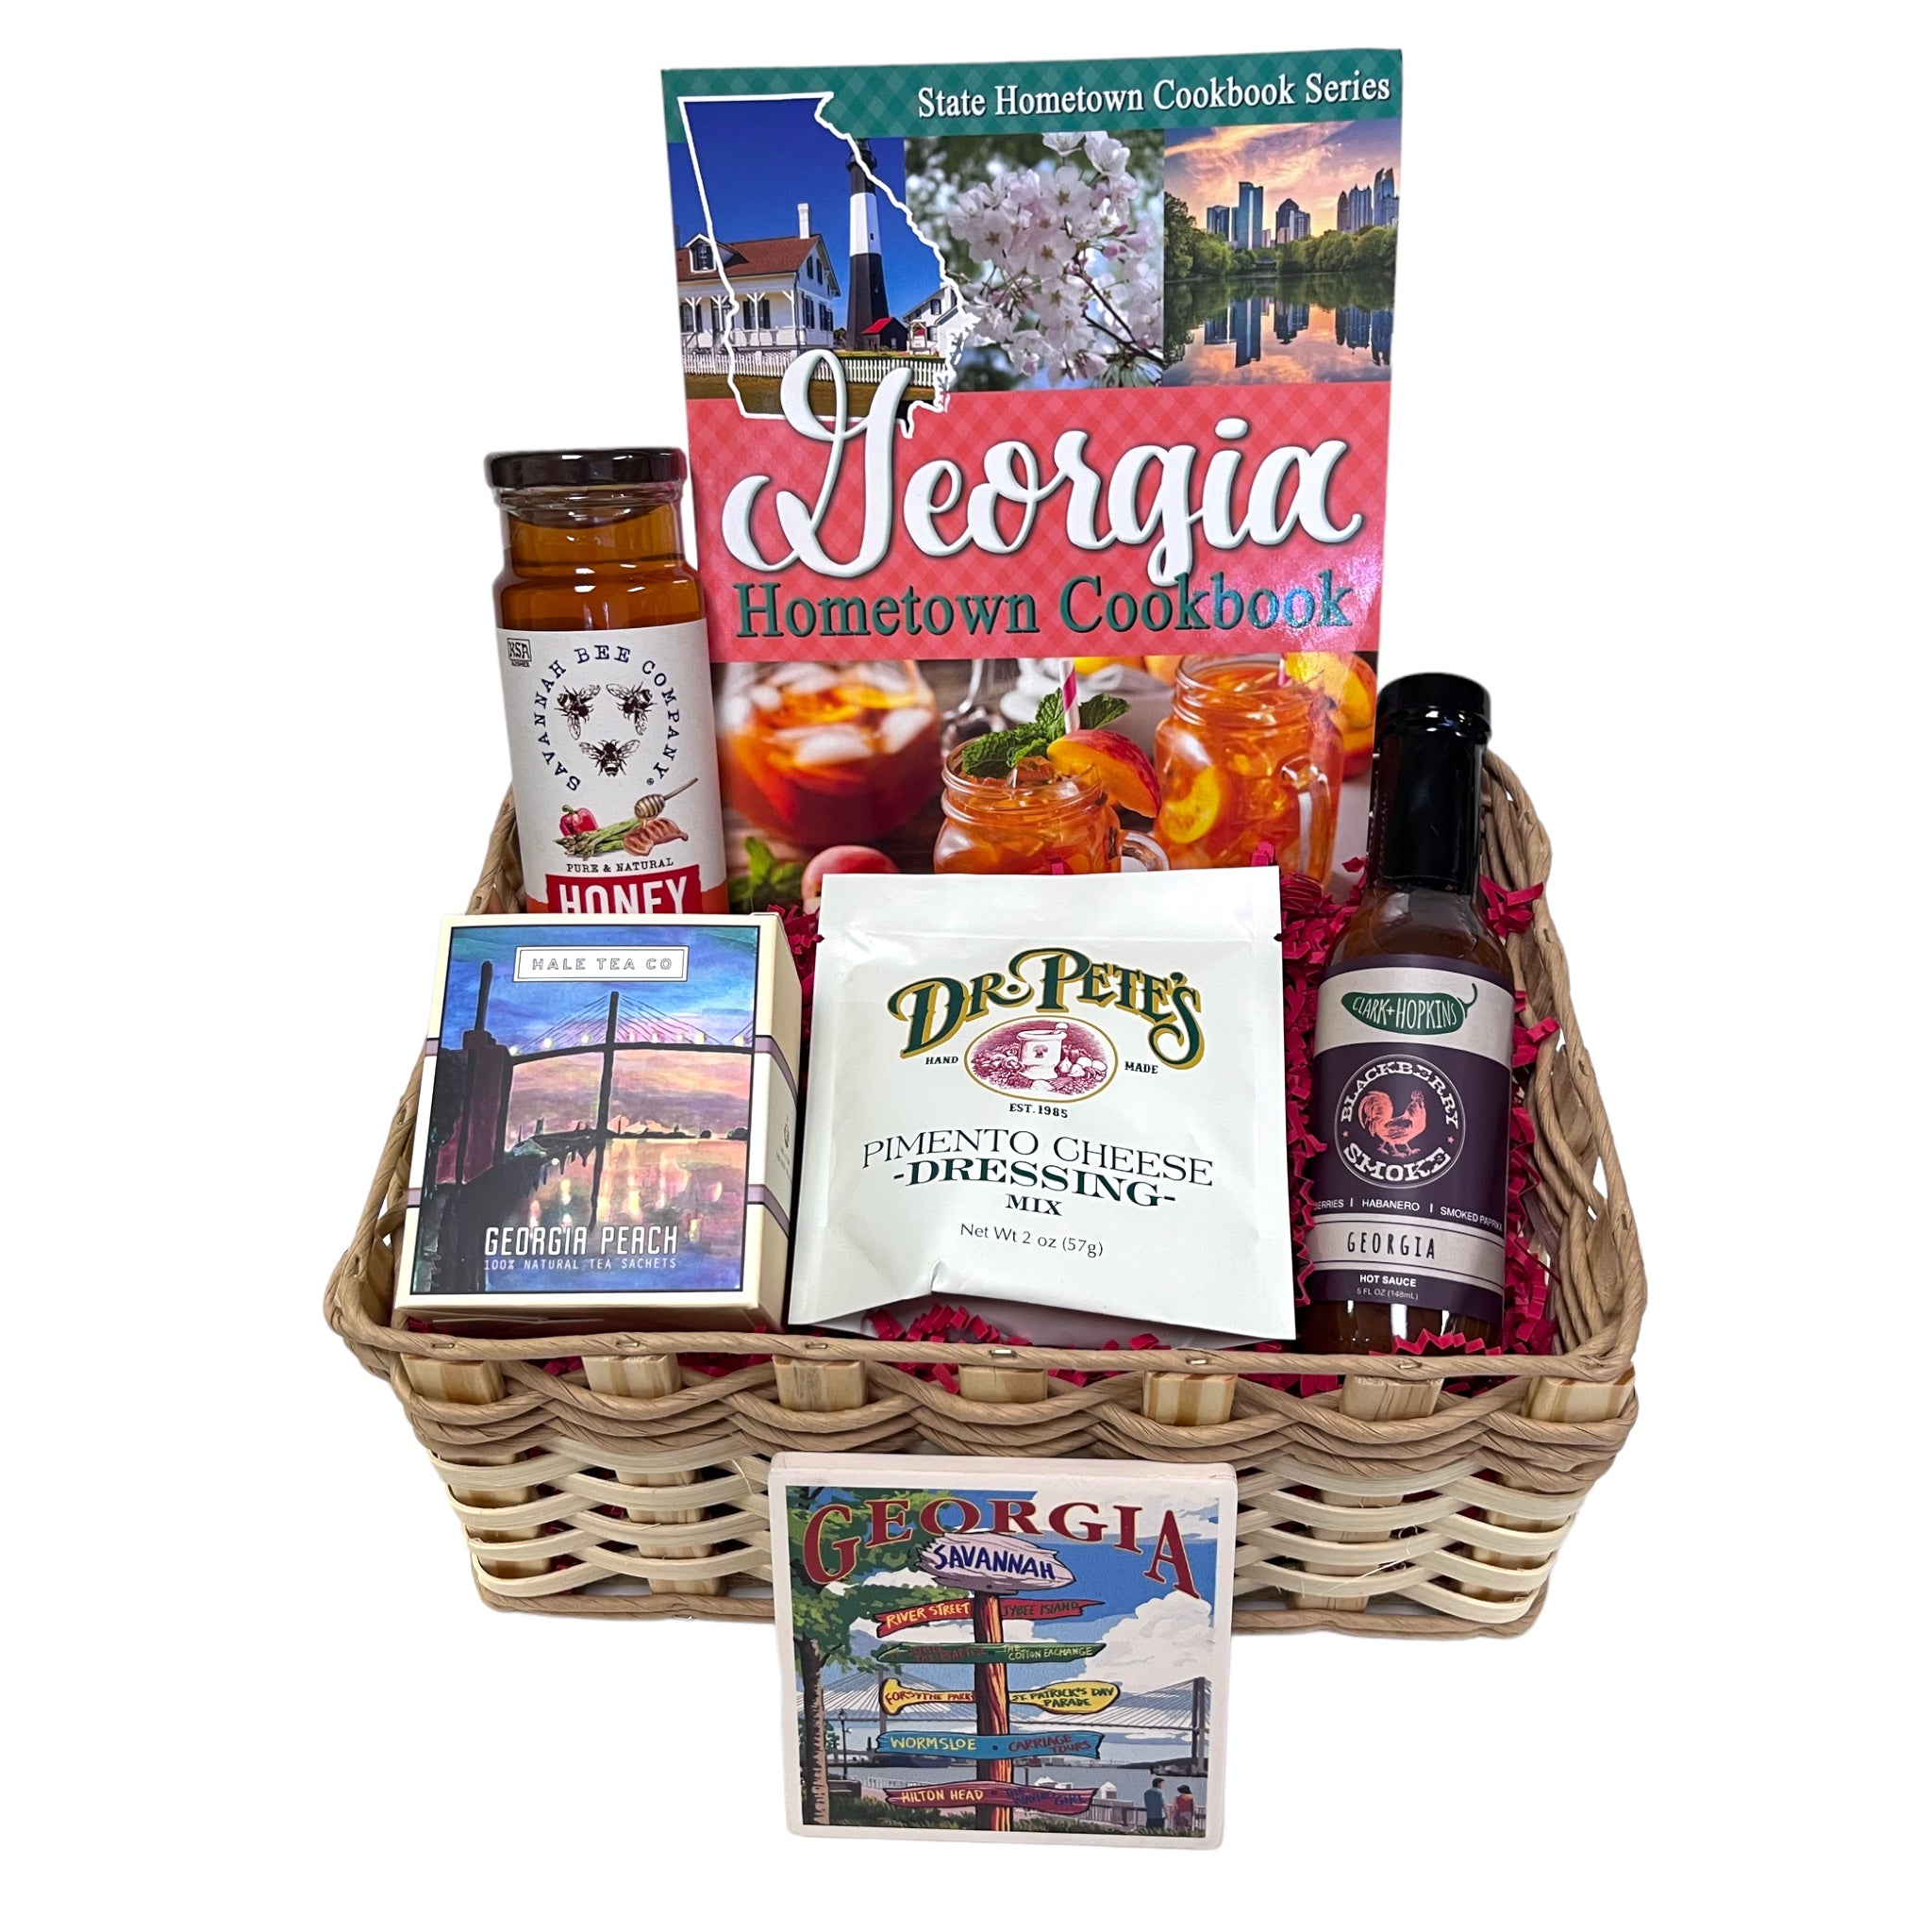 Cookbook gift basket $85 | Corporate gifting